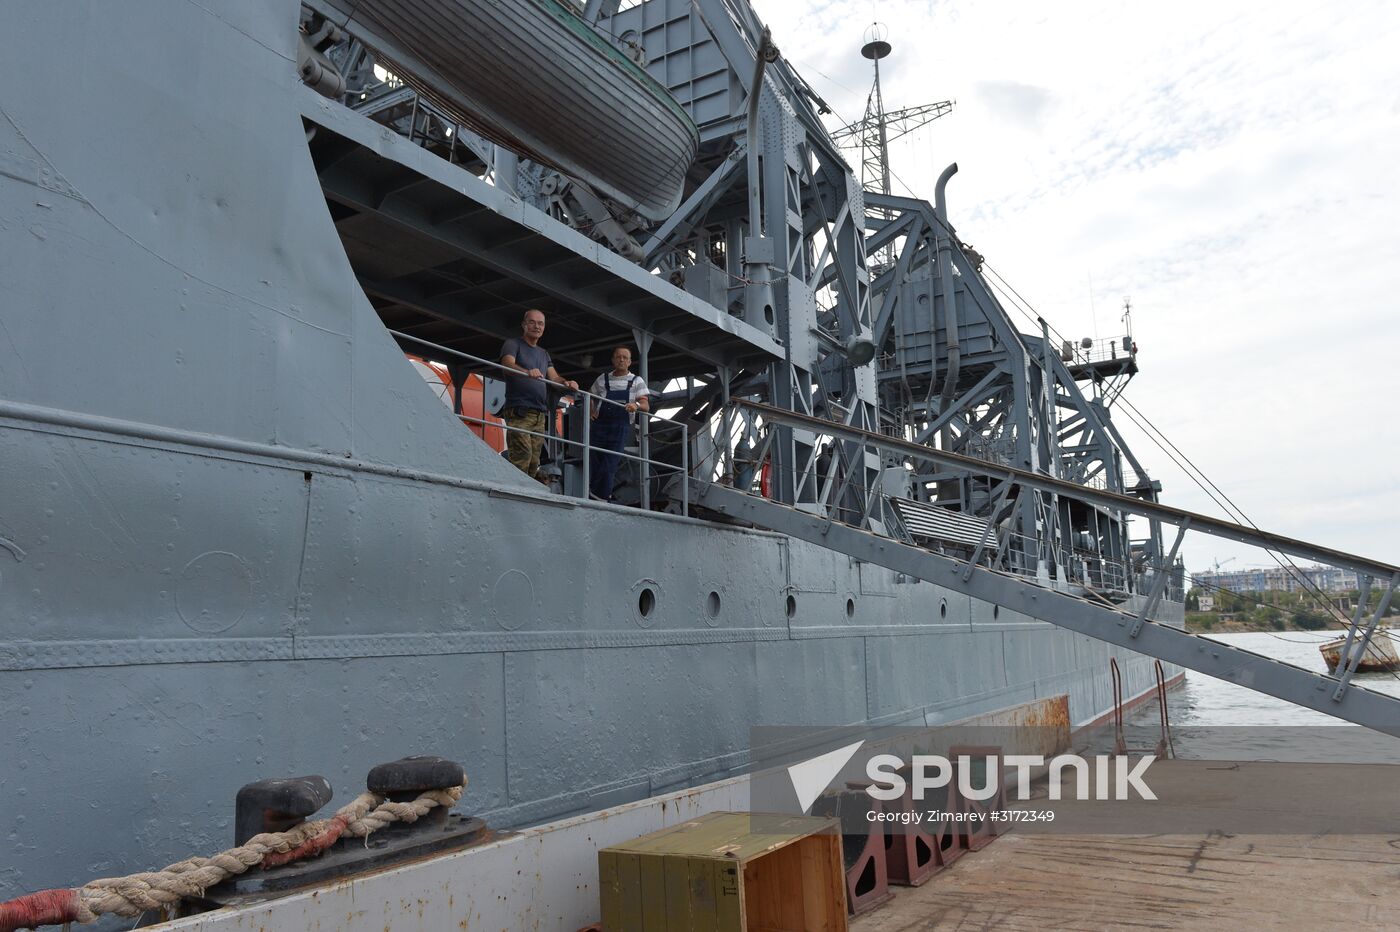 Salvage ship Kommuna of the Black Sea Fleet